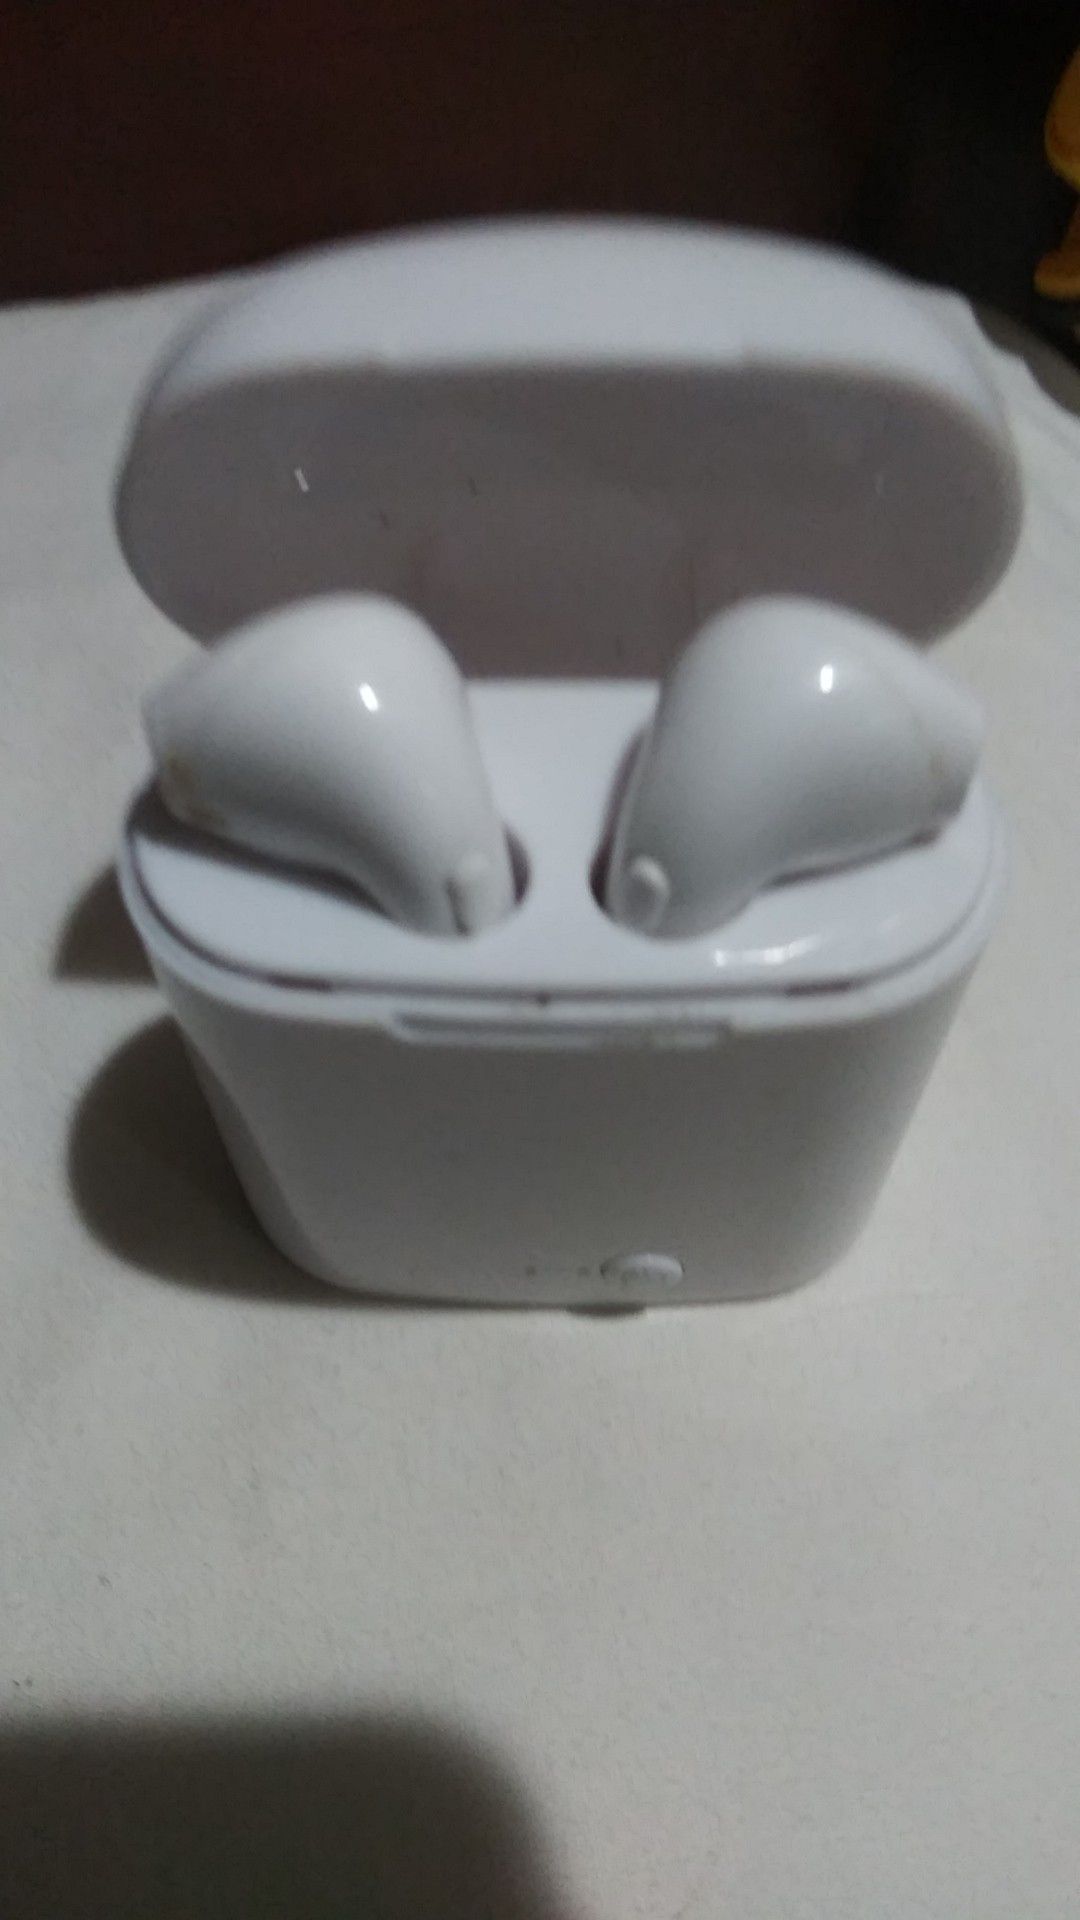 Wireless Bluetooth headphones